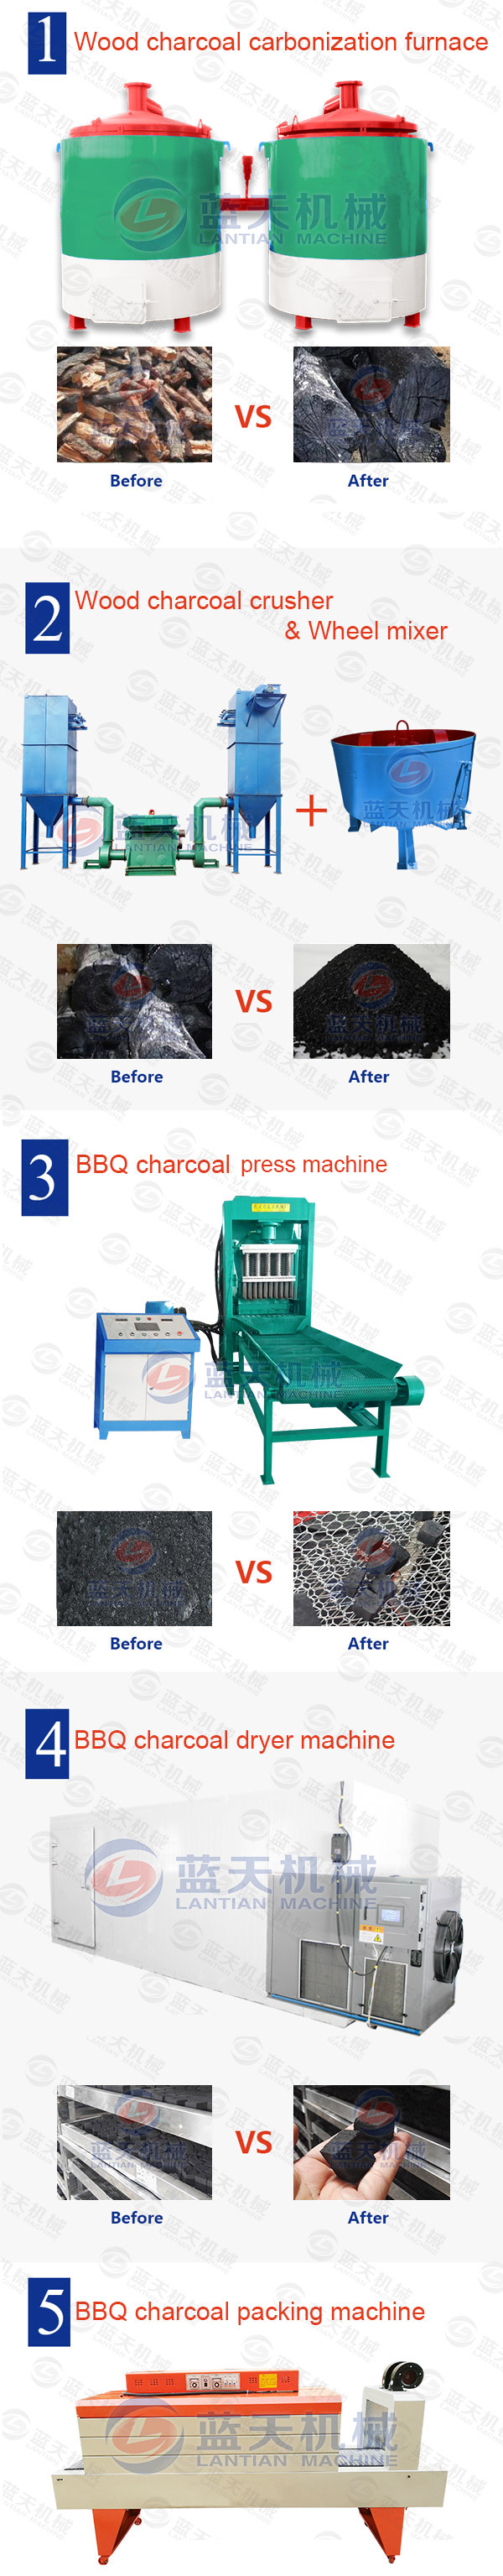 BBQ charcoal pressing machine